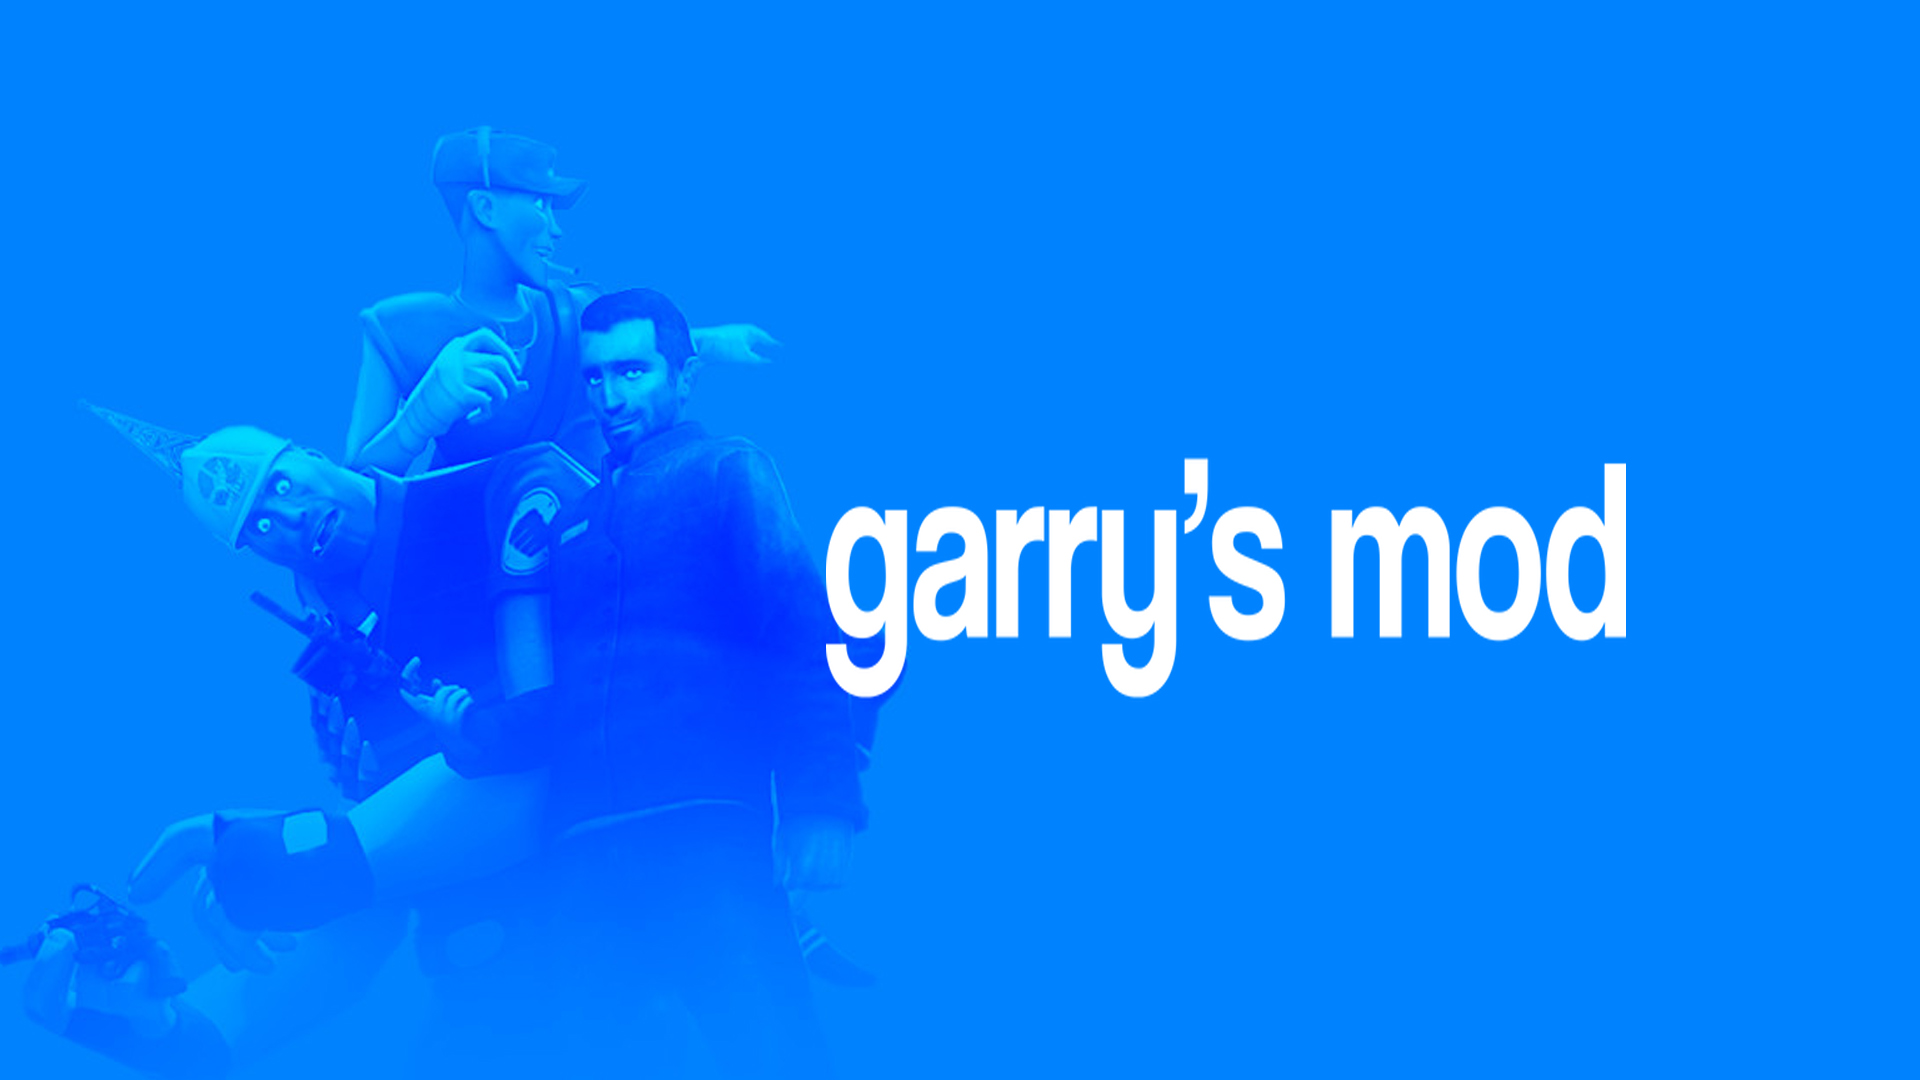 Garry's Mod Modder Known For Creating The Legendary Tool Gun Died